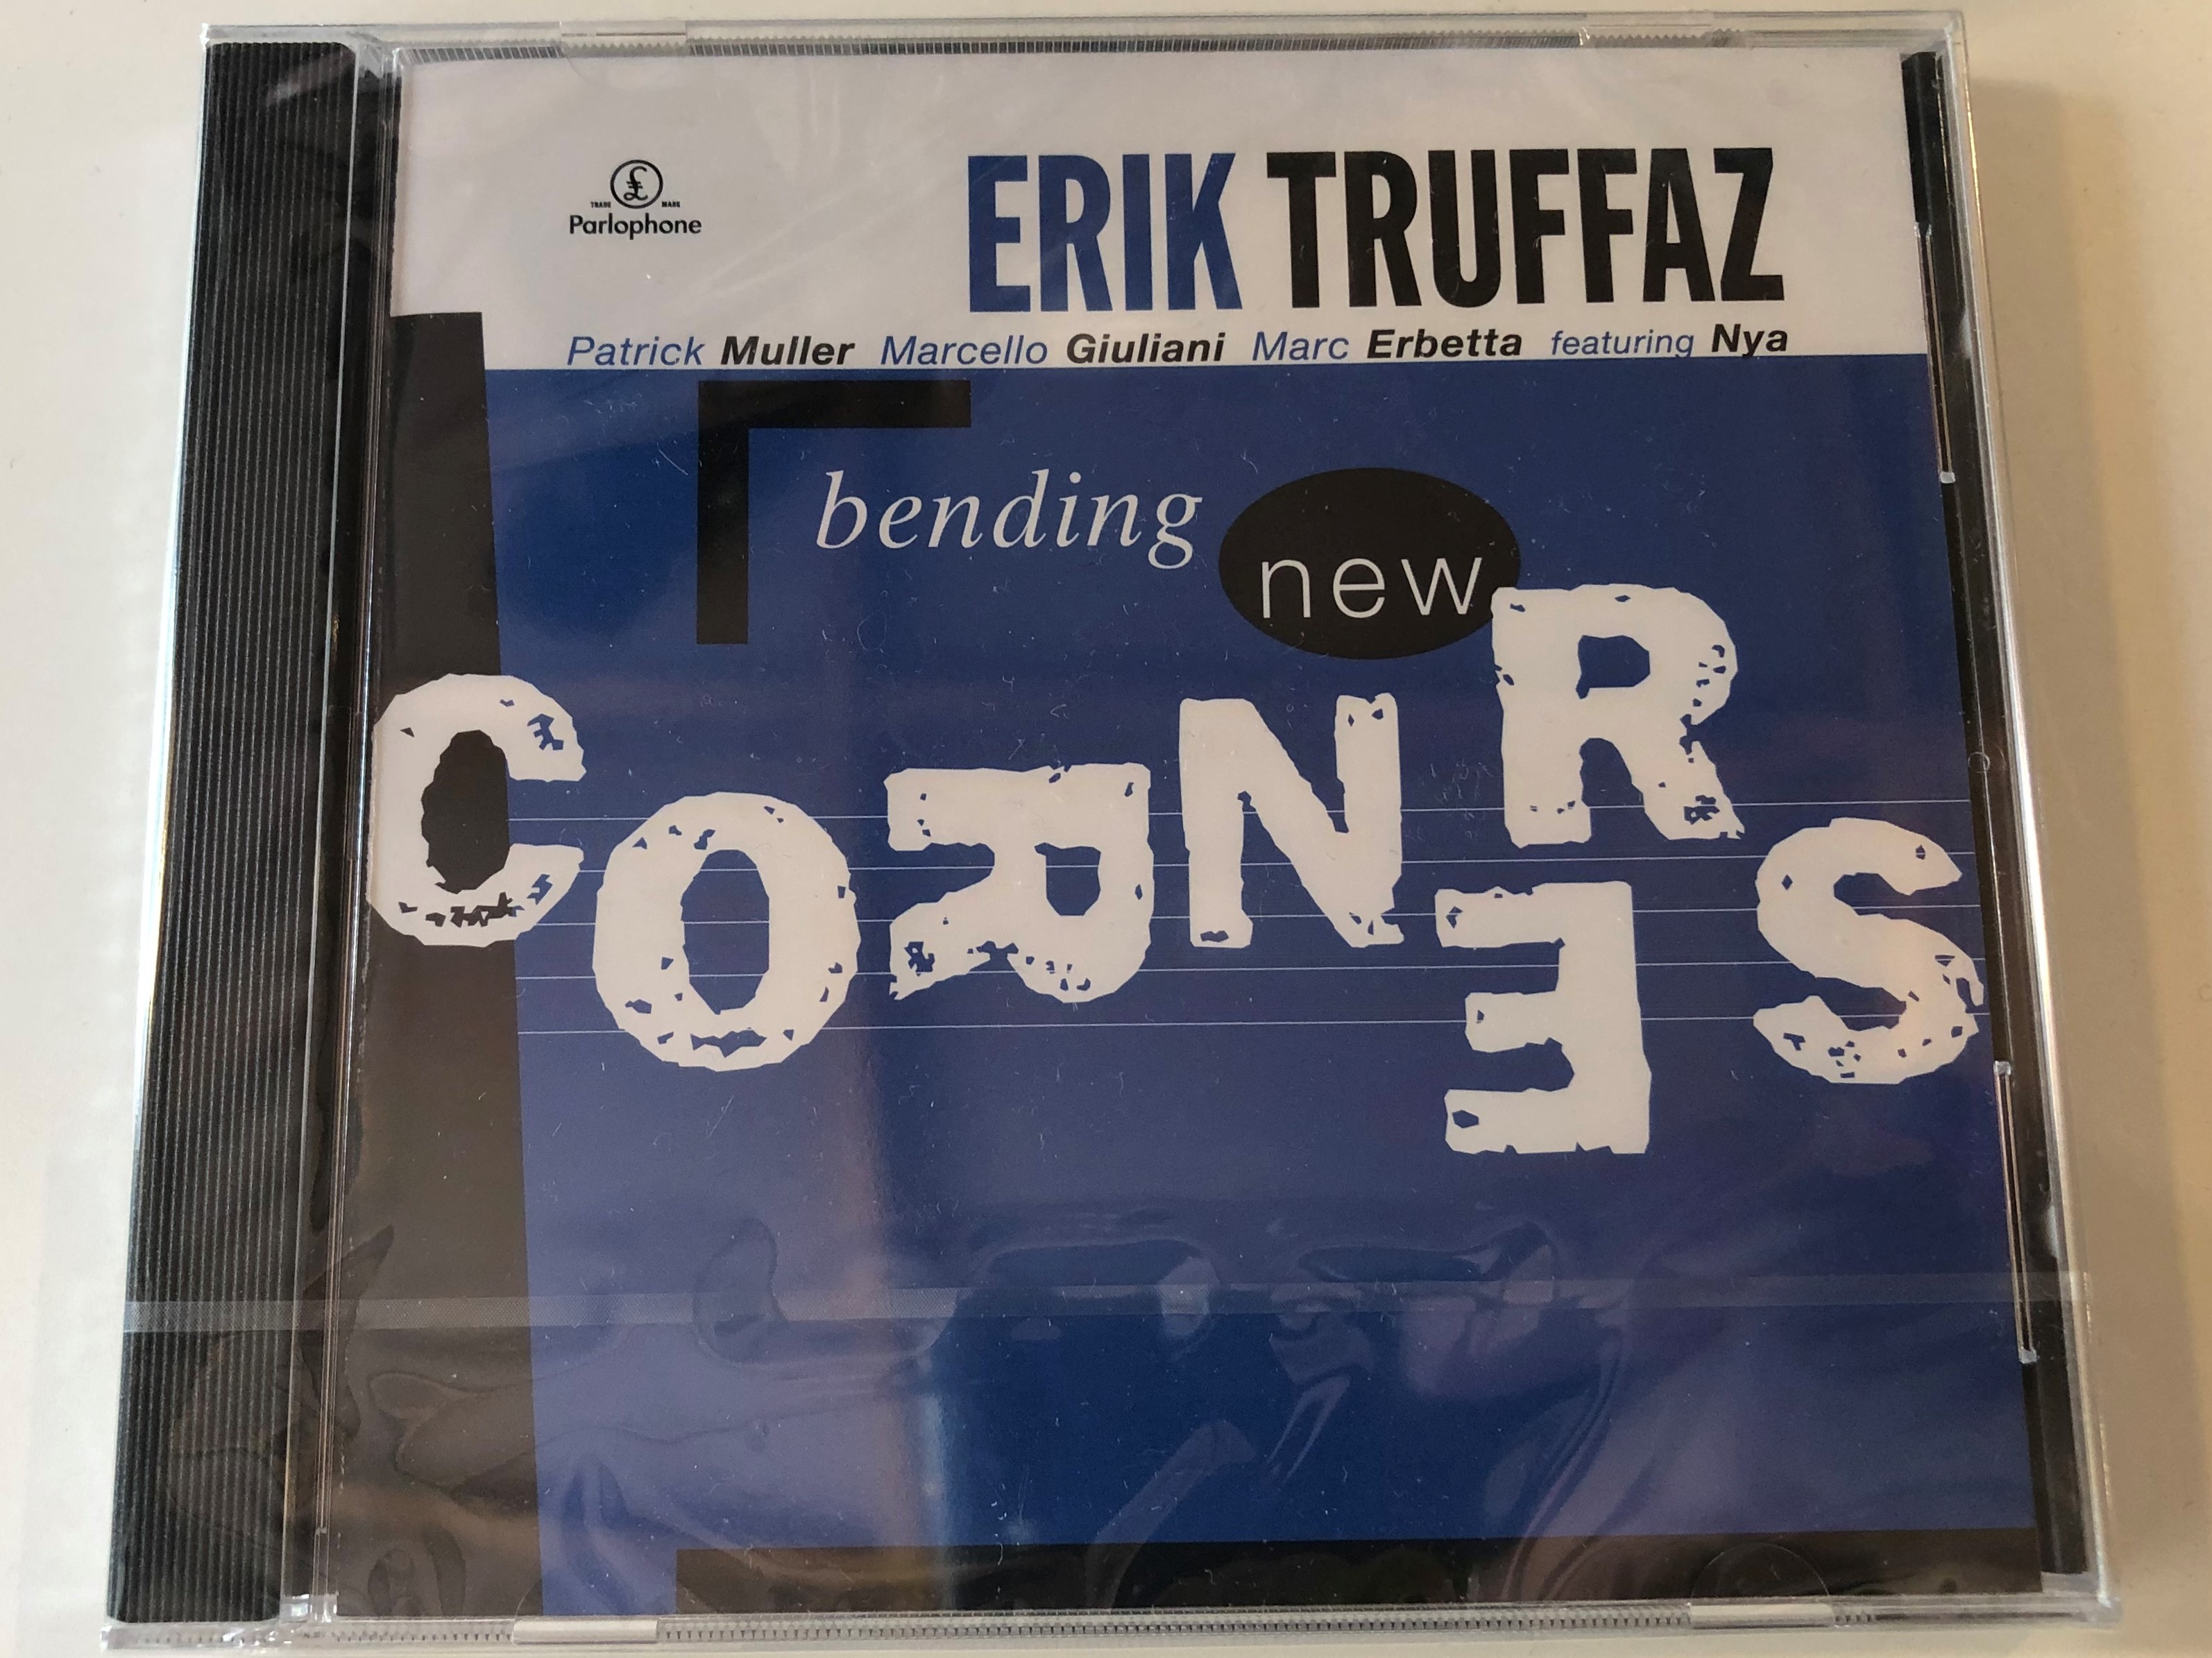 erik-truffaz-patrick-muller-marcello-giuliani-marc-erbetta-featuring-nya-bending-new-corners-parlophone-audio-cd-1999-5099994886023-1-.jpg